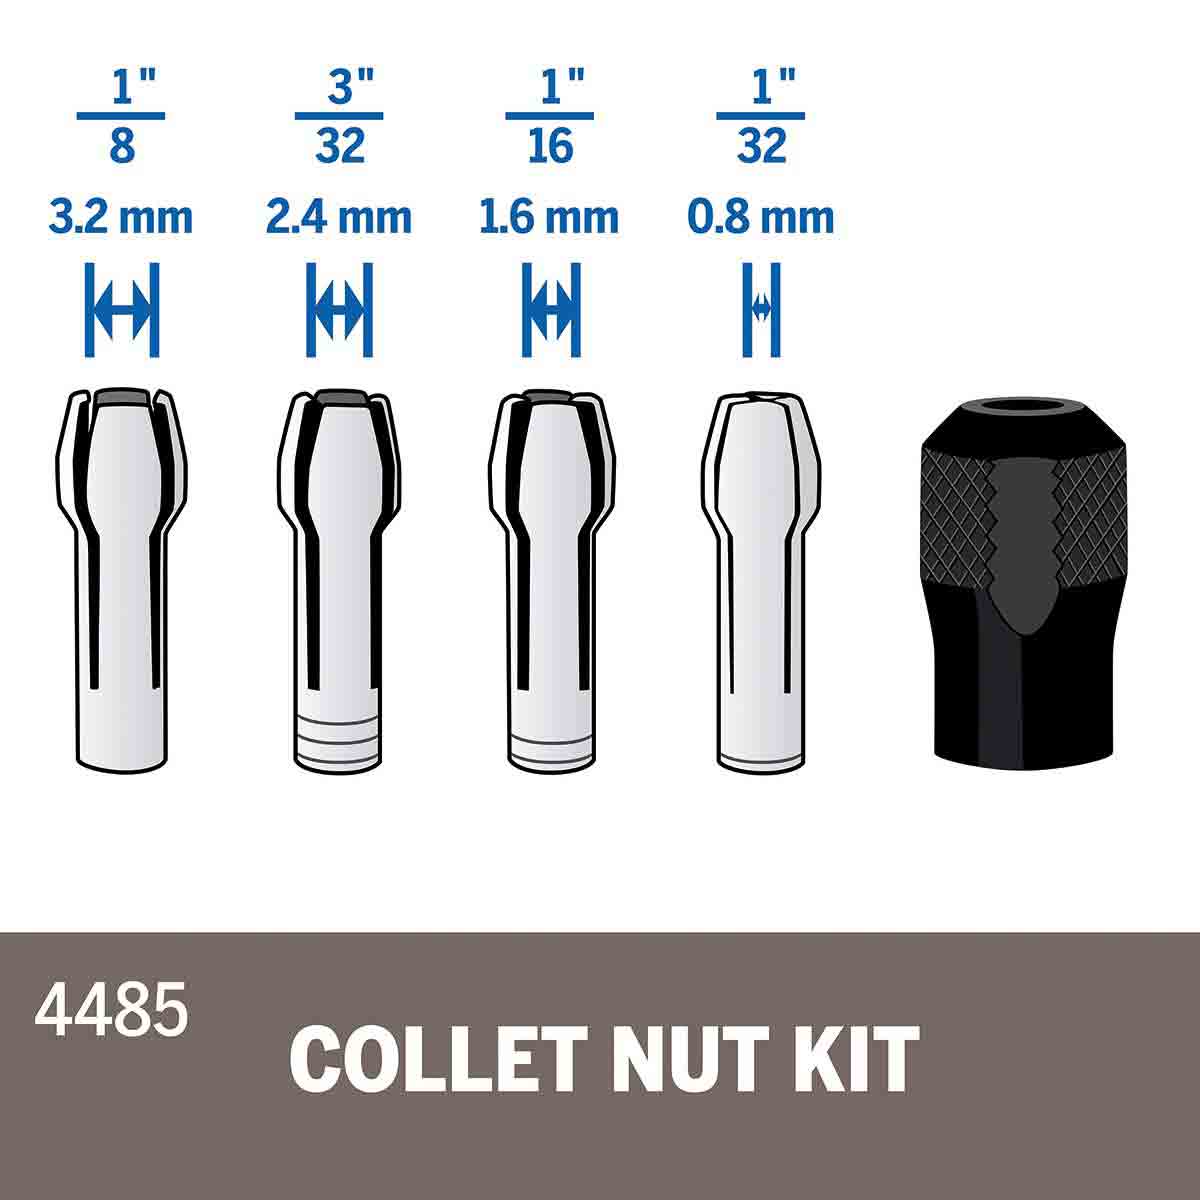 Dremel 4485 Collet and Nut Set - 5pc